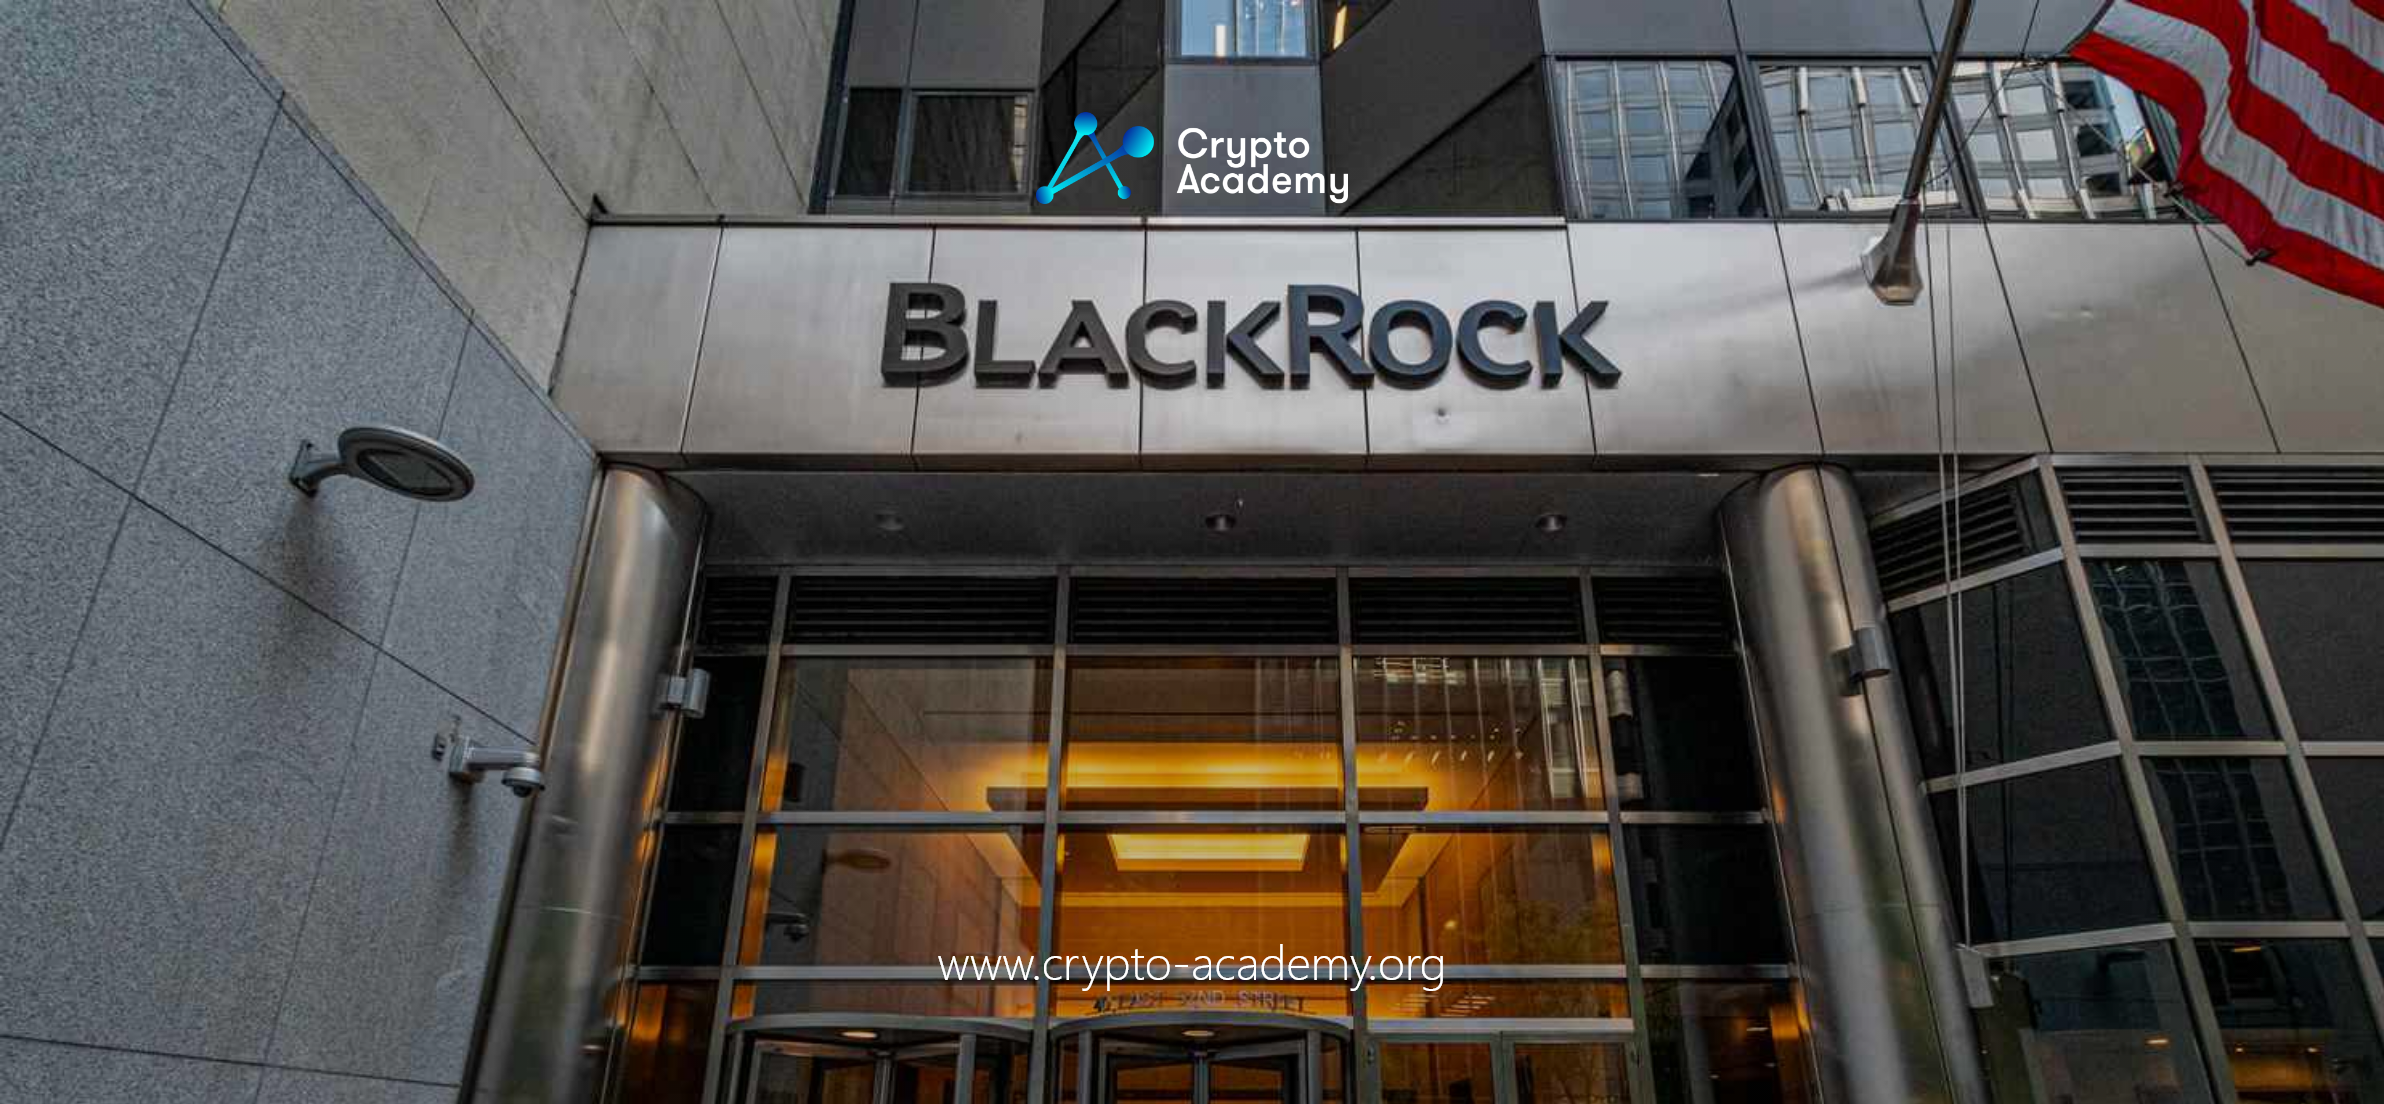 BlackRock Has Over 100K Bitcoin Under Management